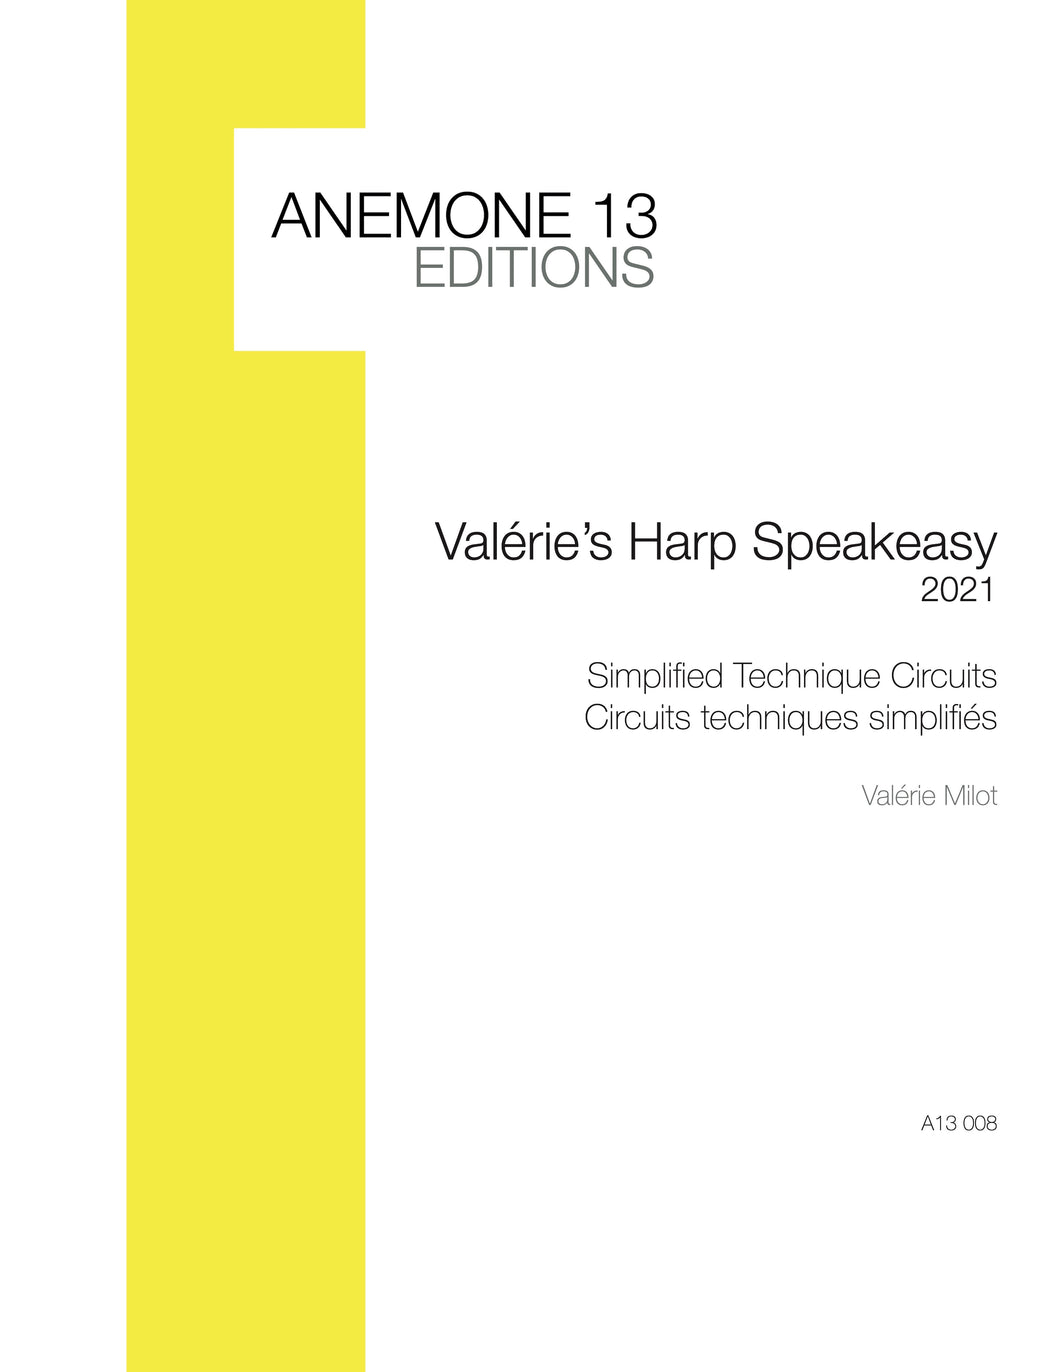 Simplified Technique Circuits - Valérie's Harp Speakeasy 2021